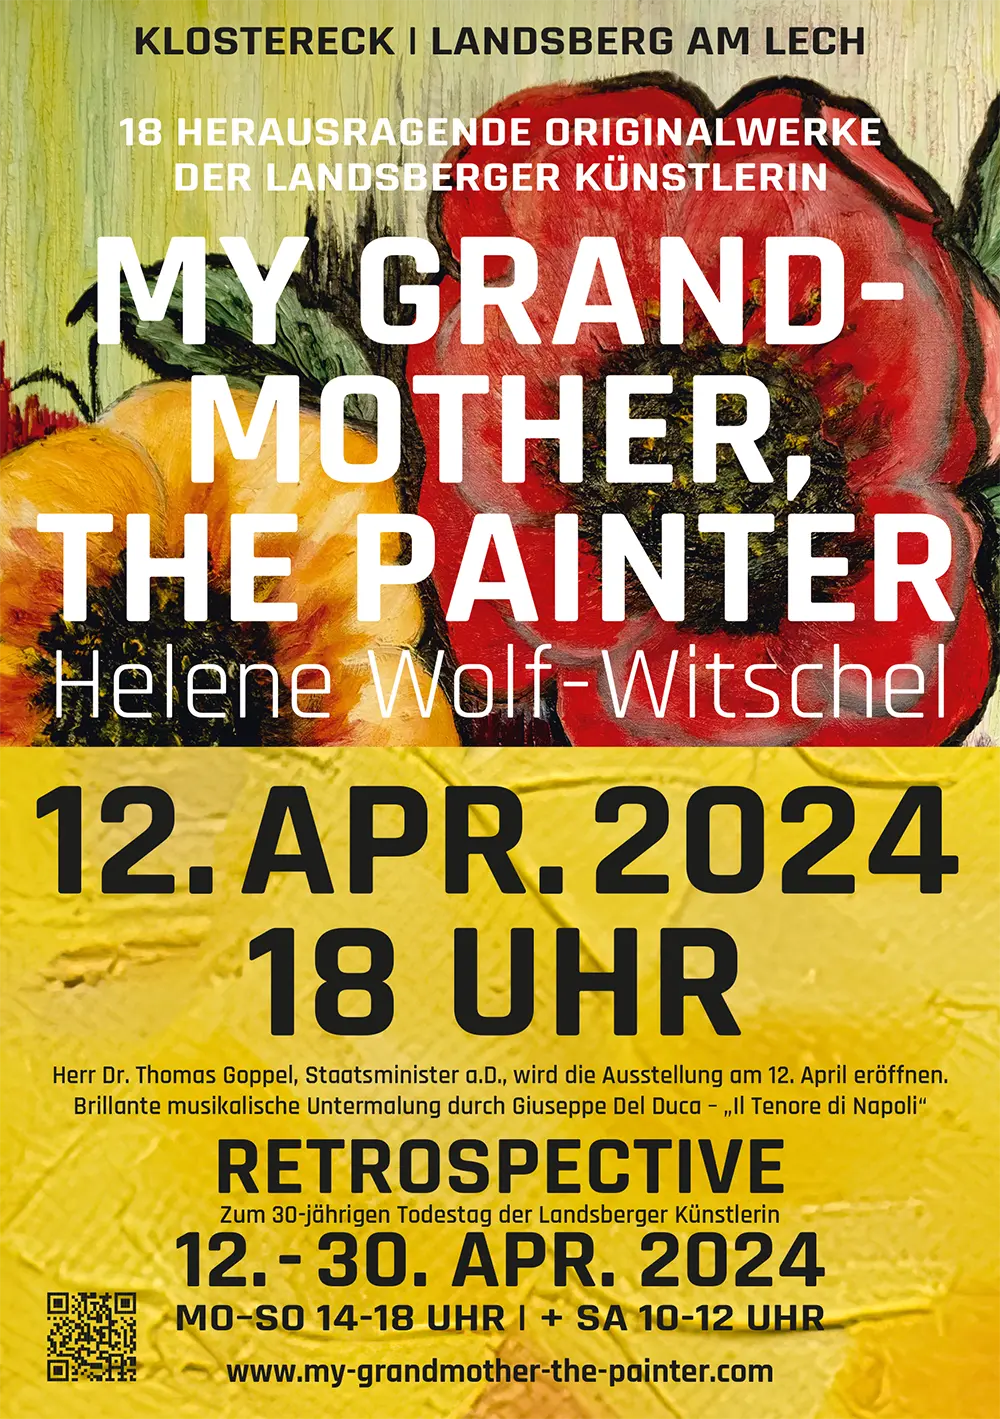 My Grandmother, the Painter - Ausstellung Landsberg